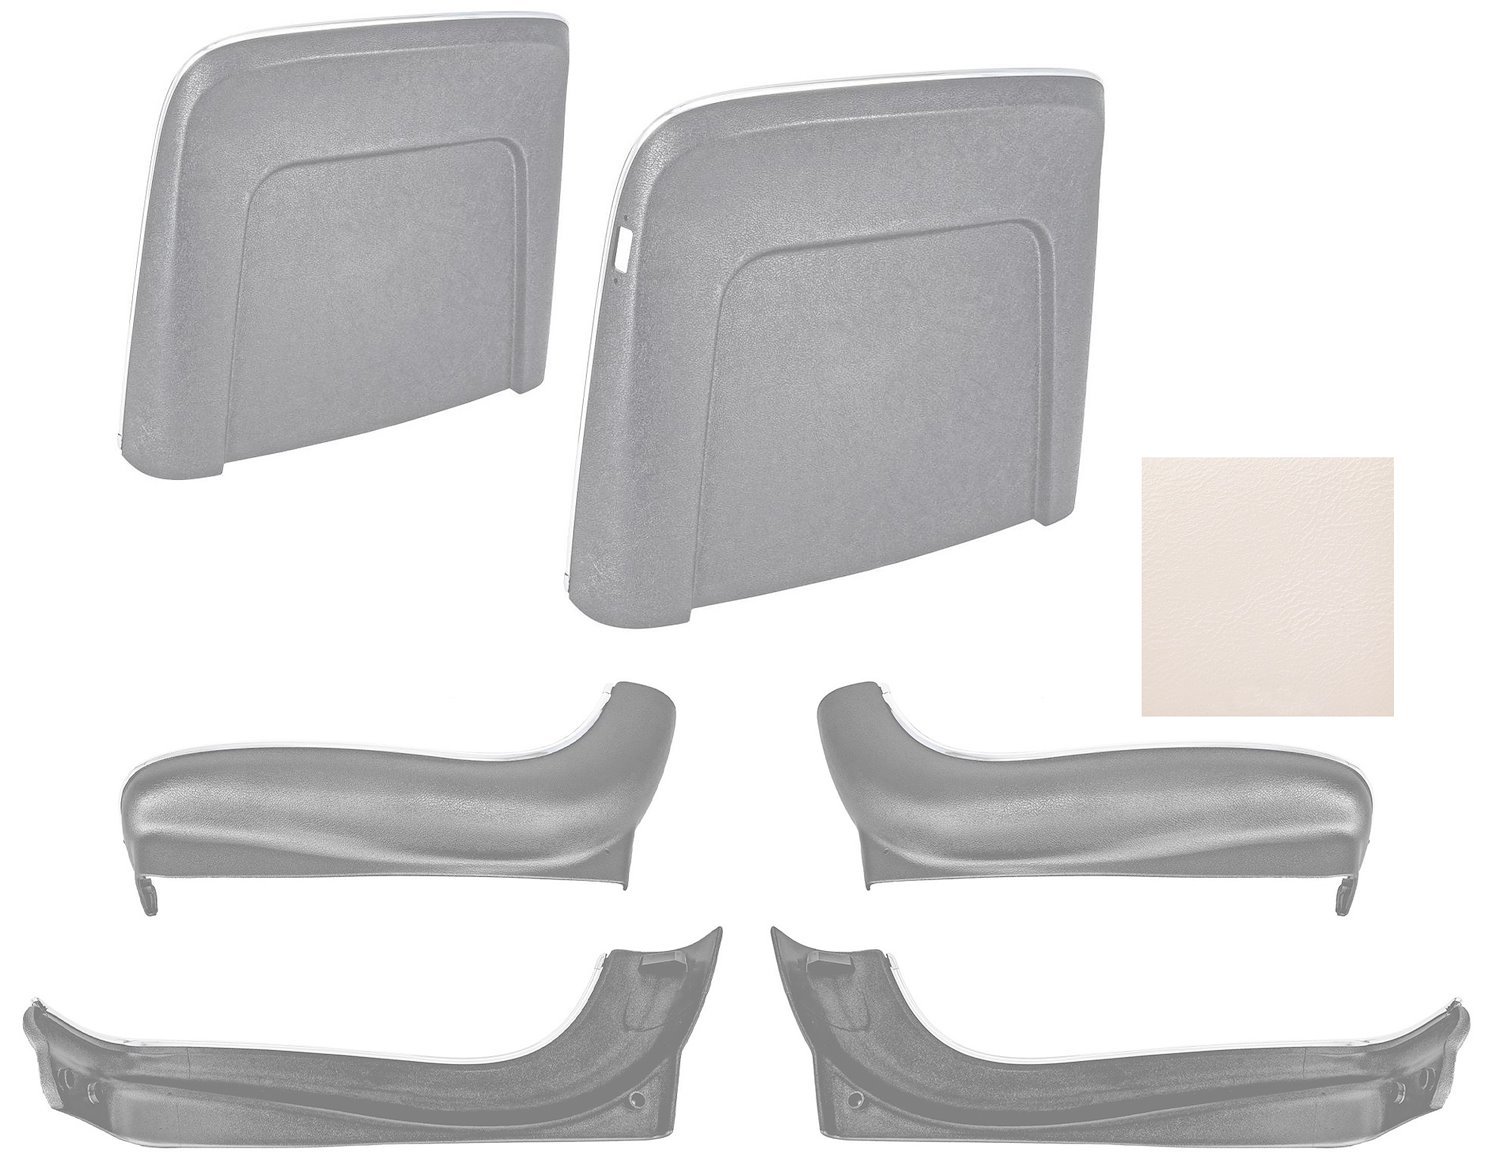 Seat Backs & Sides Kit Fits Select 1967 GM Models [White]